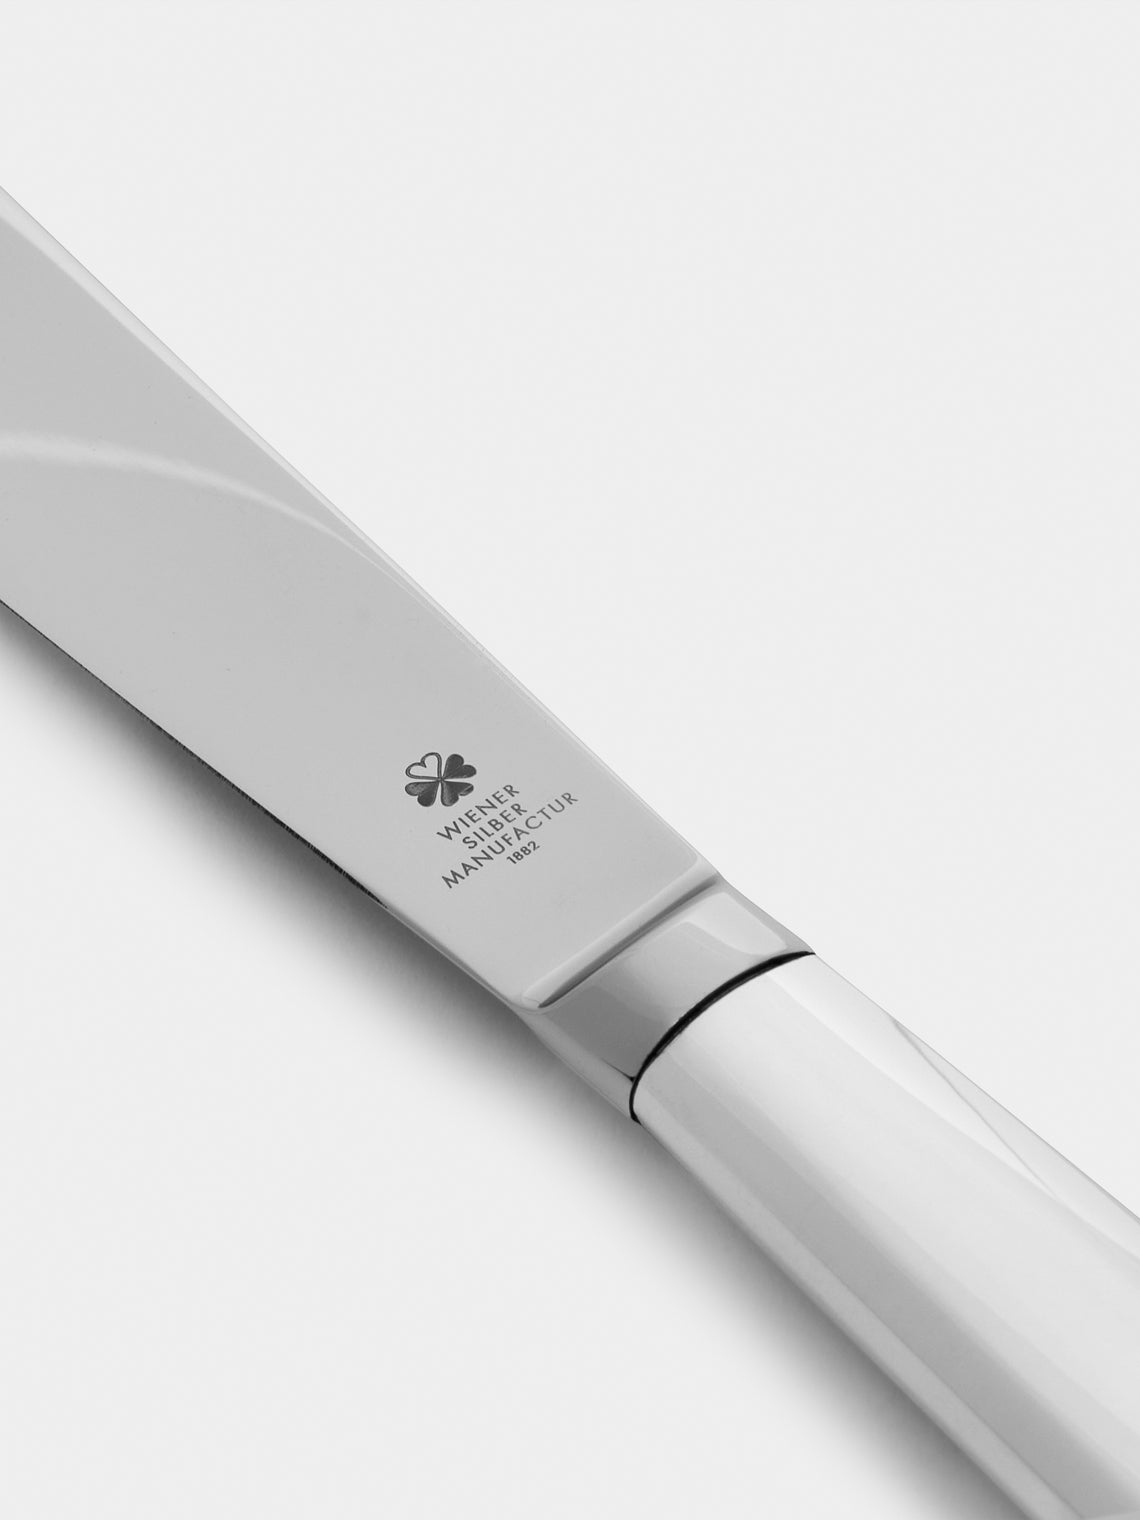 Wiener Silber Manufactur - Josef Hoffmann 135 Silver-Plated Dinner Knife -  - ABASK